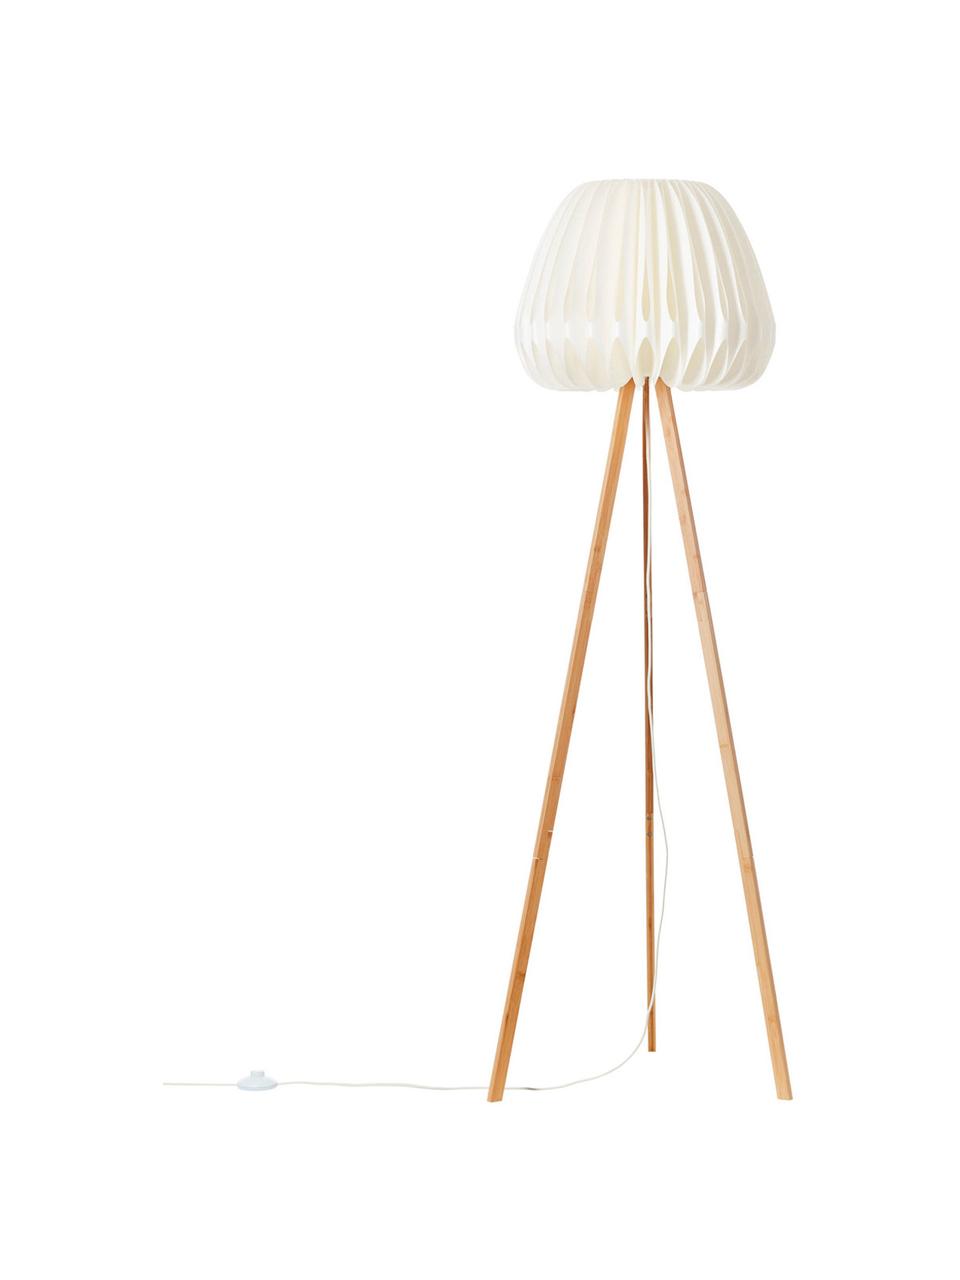 Dizajnová stojacia lampa z bambusu Inna, Biela, bambus